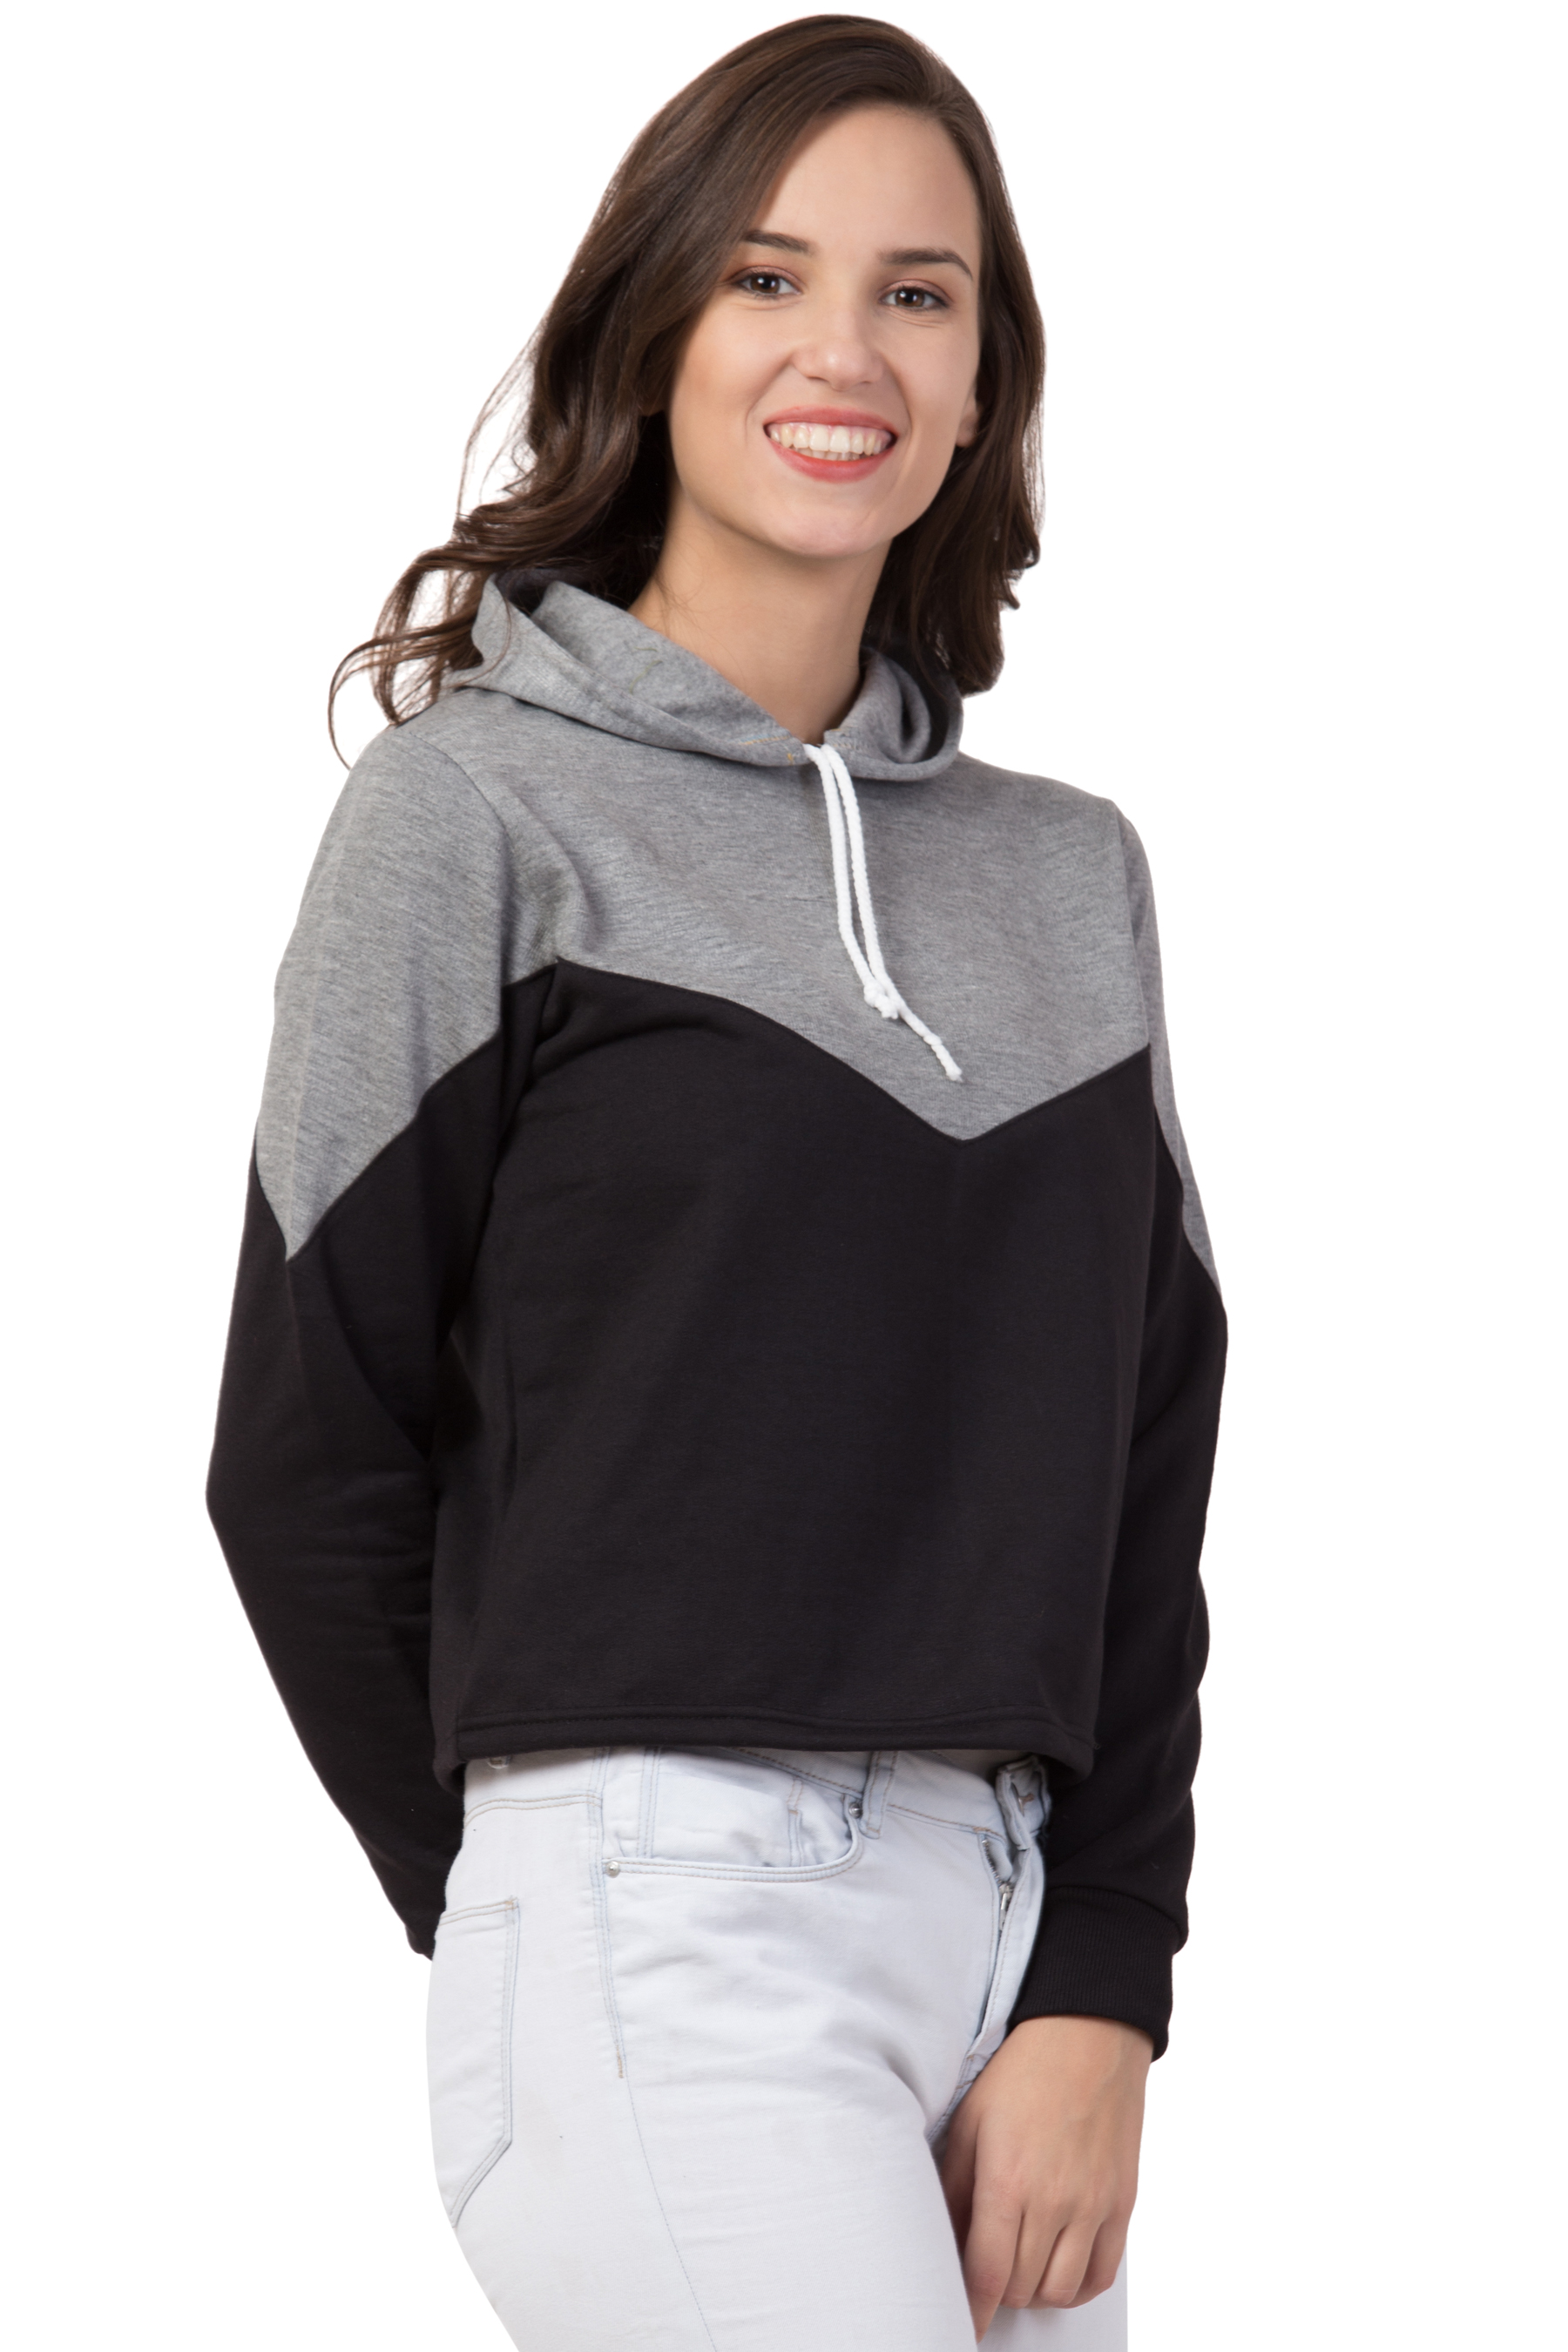 Buy Bestic Fashion Full Sleeve Solid Women Sweatshirt Hoodies Online ...